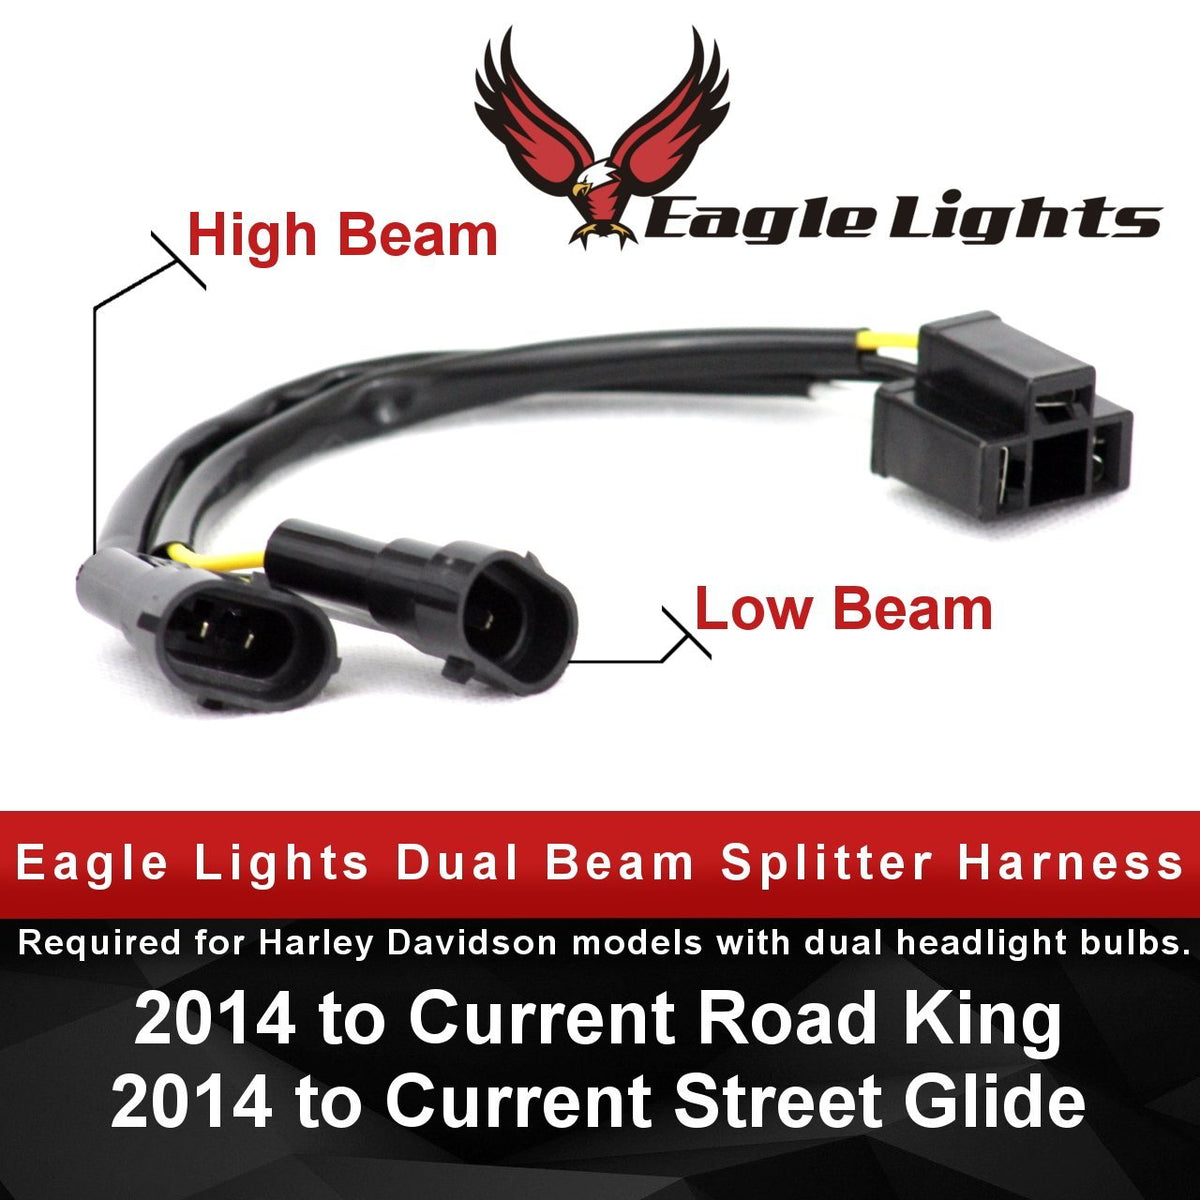 7” Headlight Accessory - Eagle Lights Splitter Harness Converts Dual Beam Headlights To Single LED Headlight